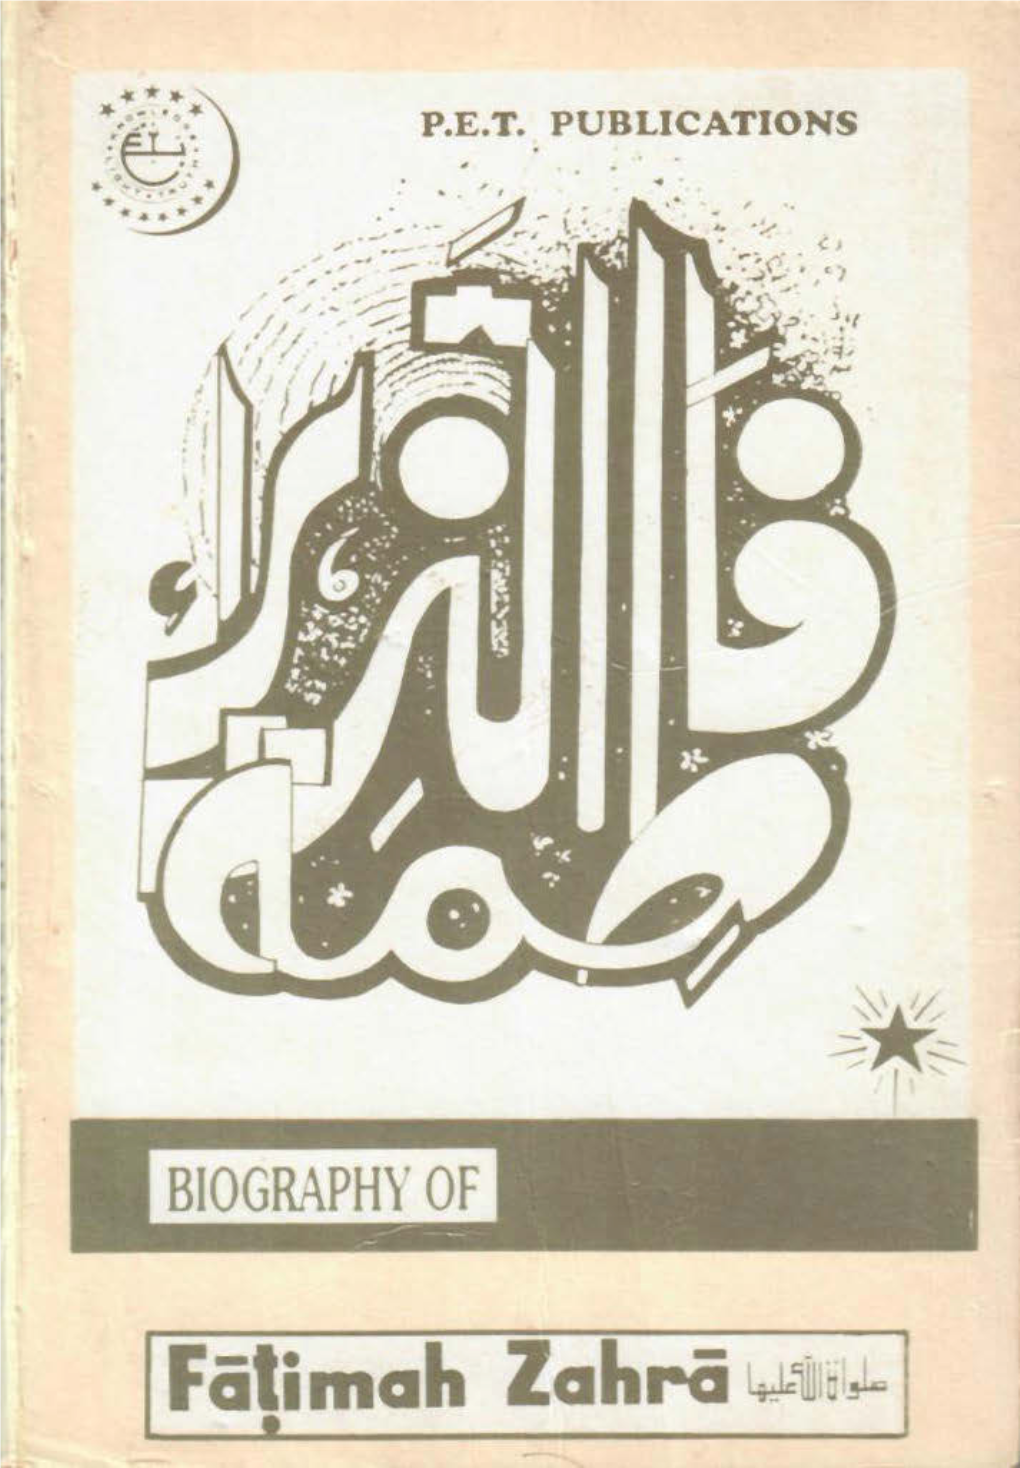 Biography of Fatimah Zahra (S.A.)